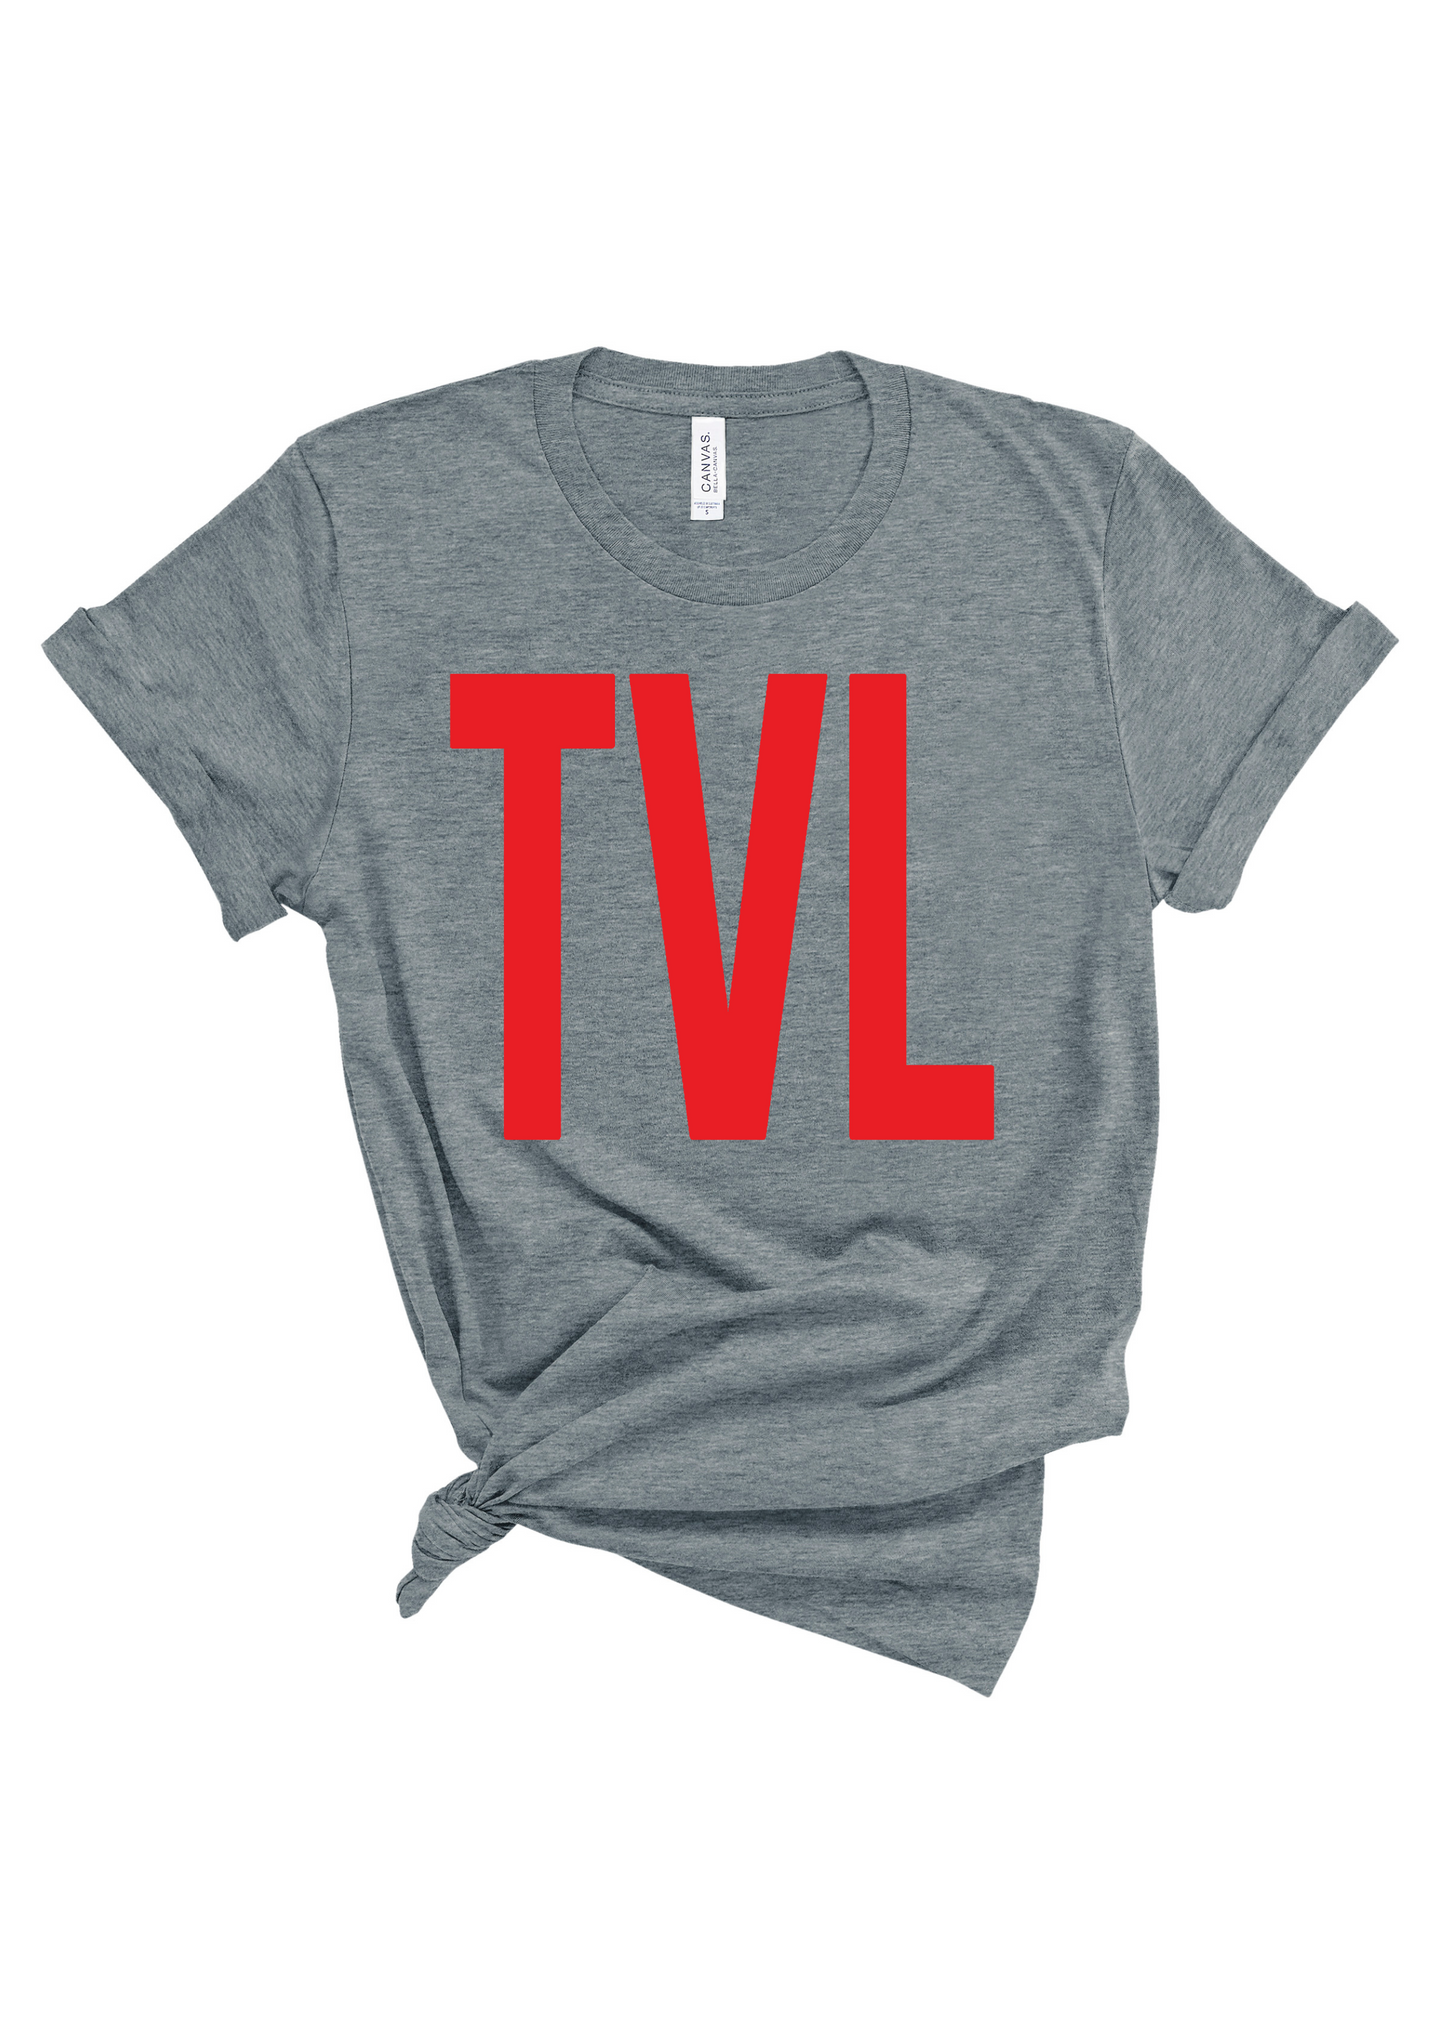 TVL | Adult Tee-Adult Tee-Shirt Shop-Sister Shirts, Cute & Custom Tees for Mama & Littles in Trussville, Alabama.